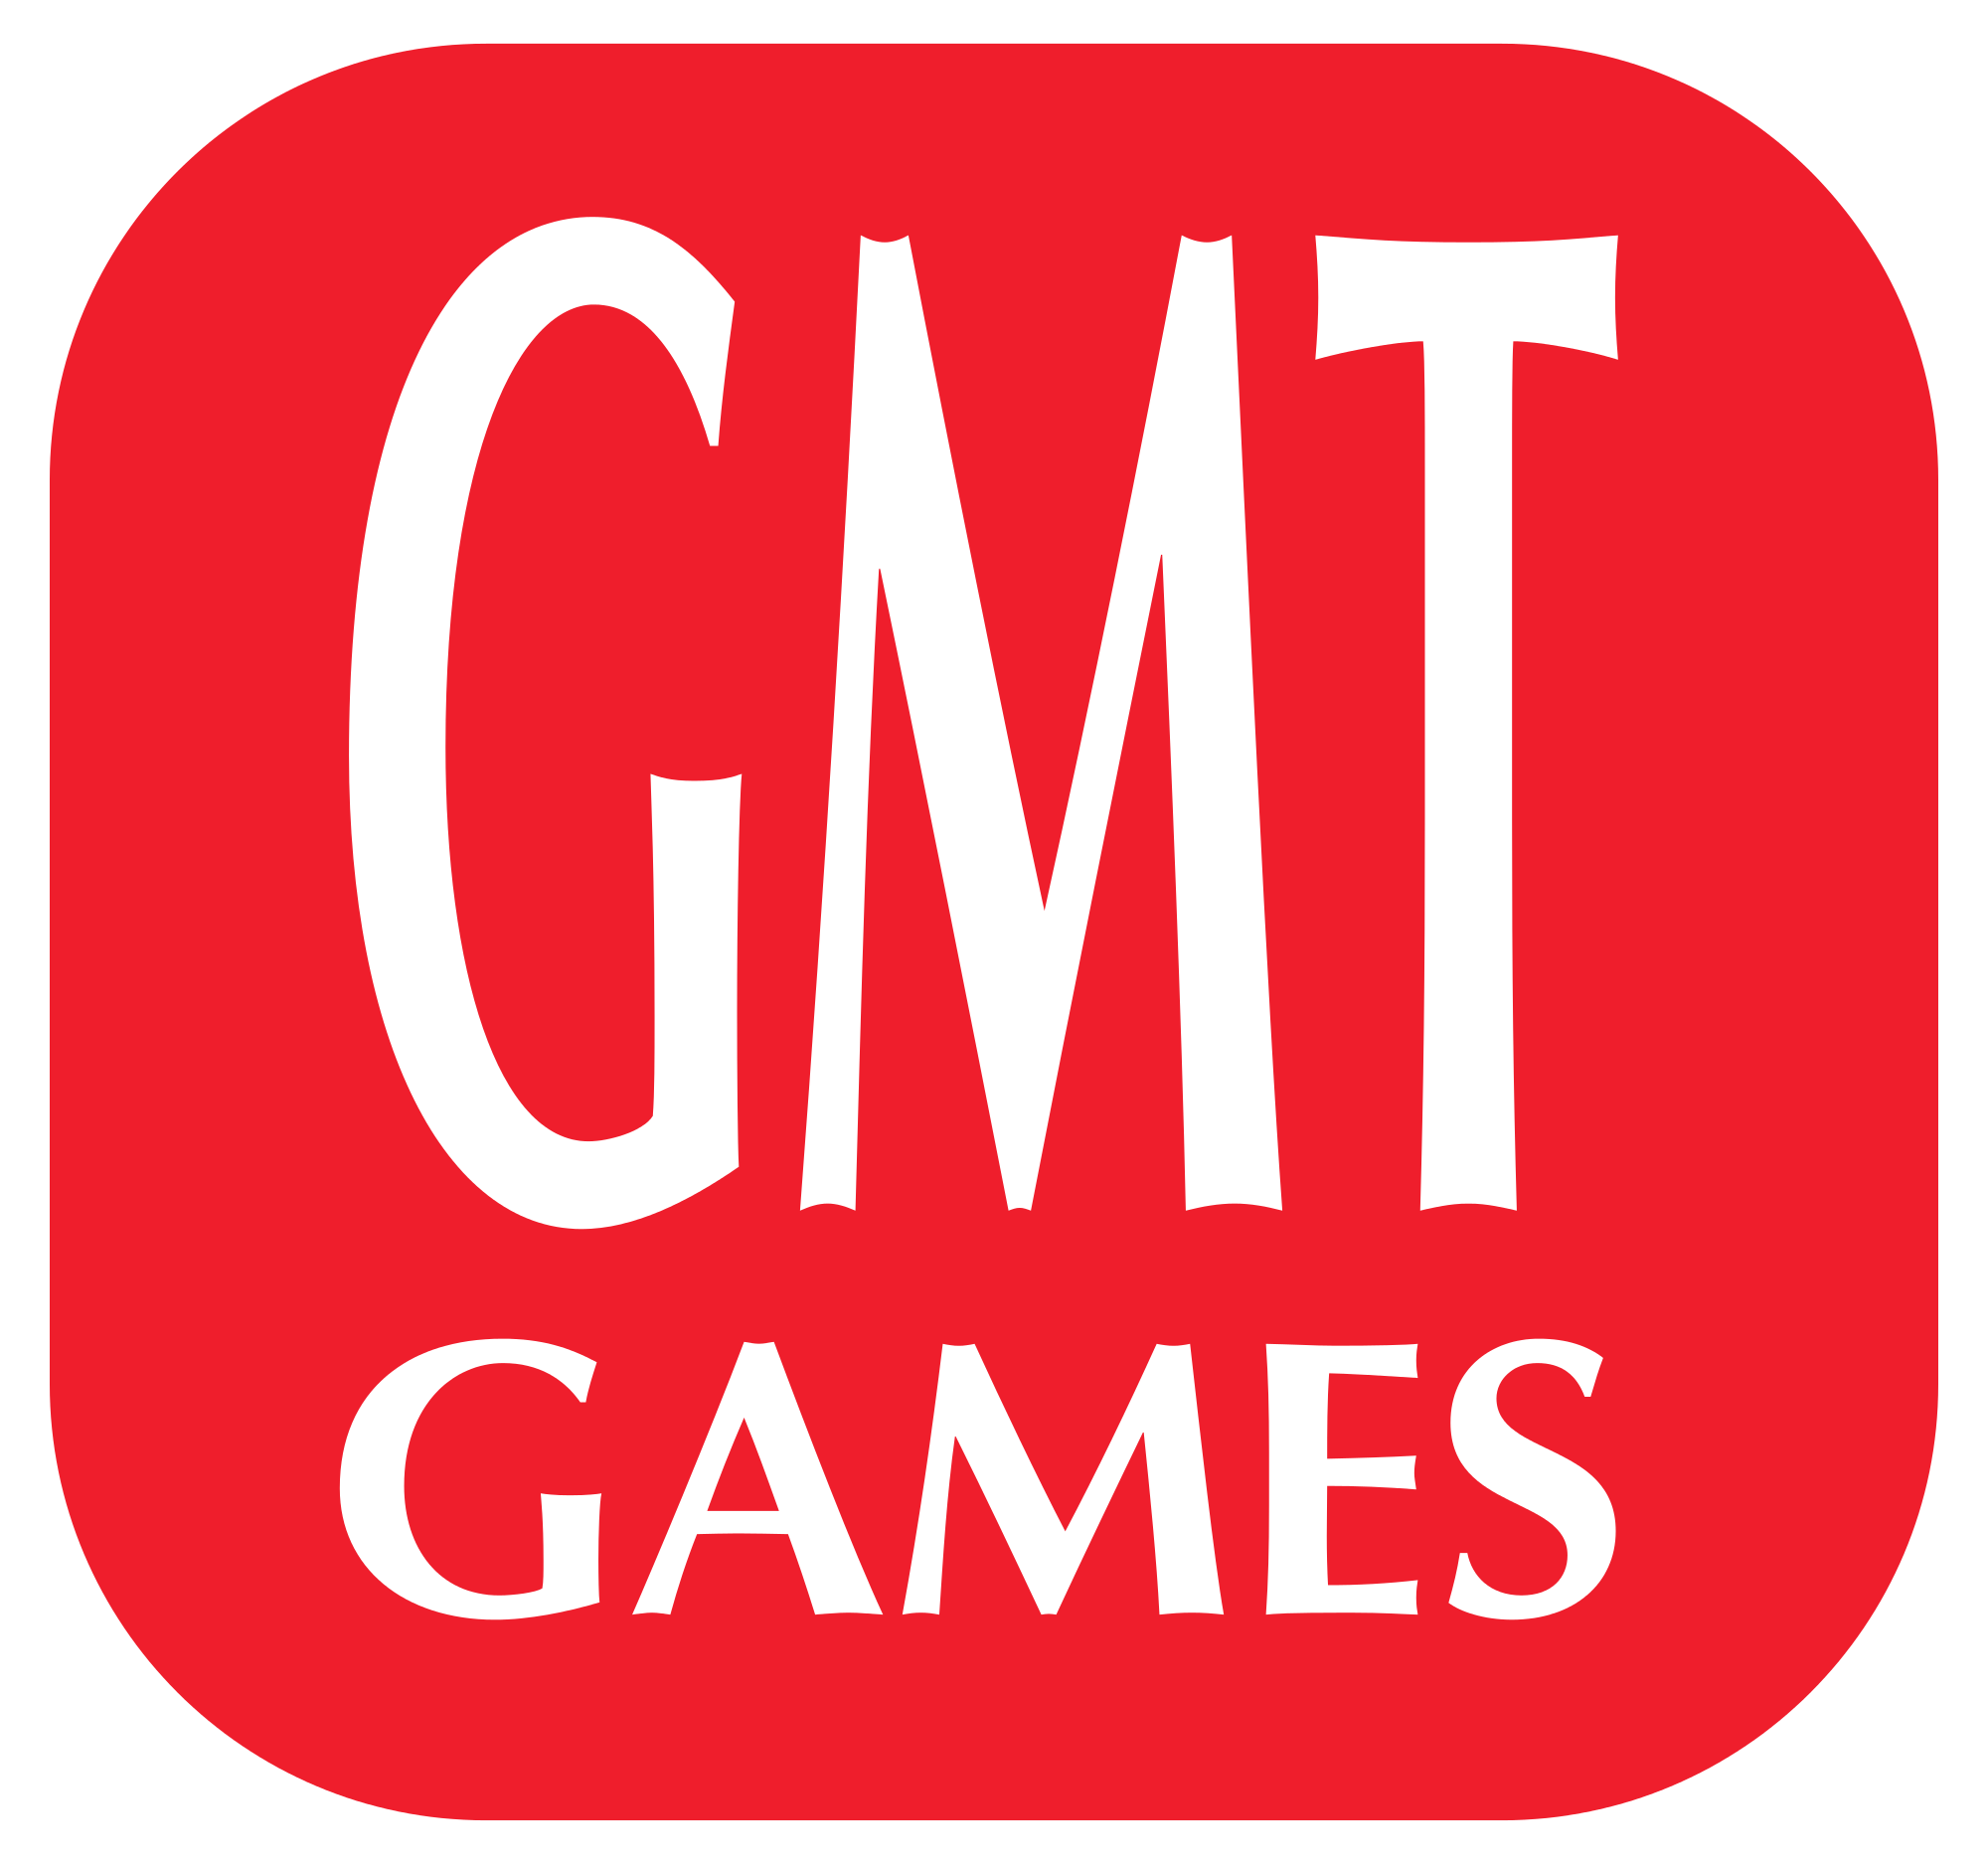 GMT games logo